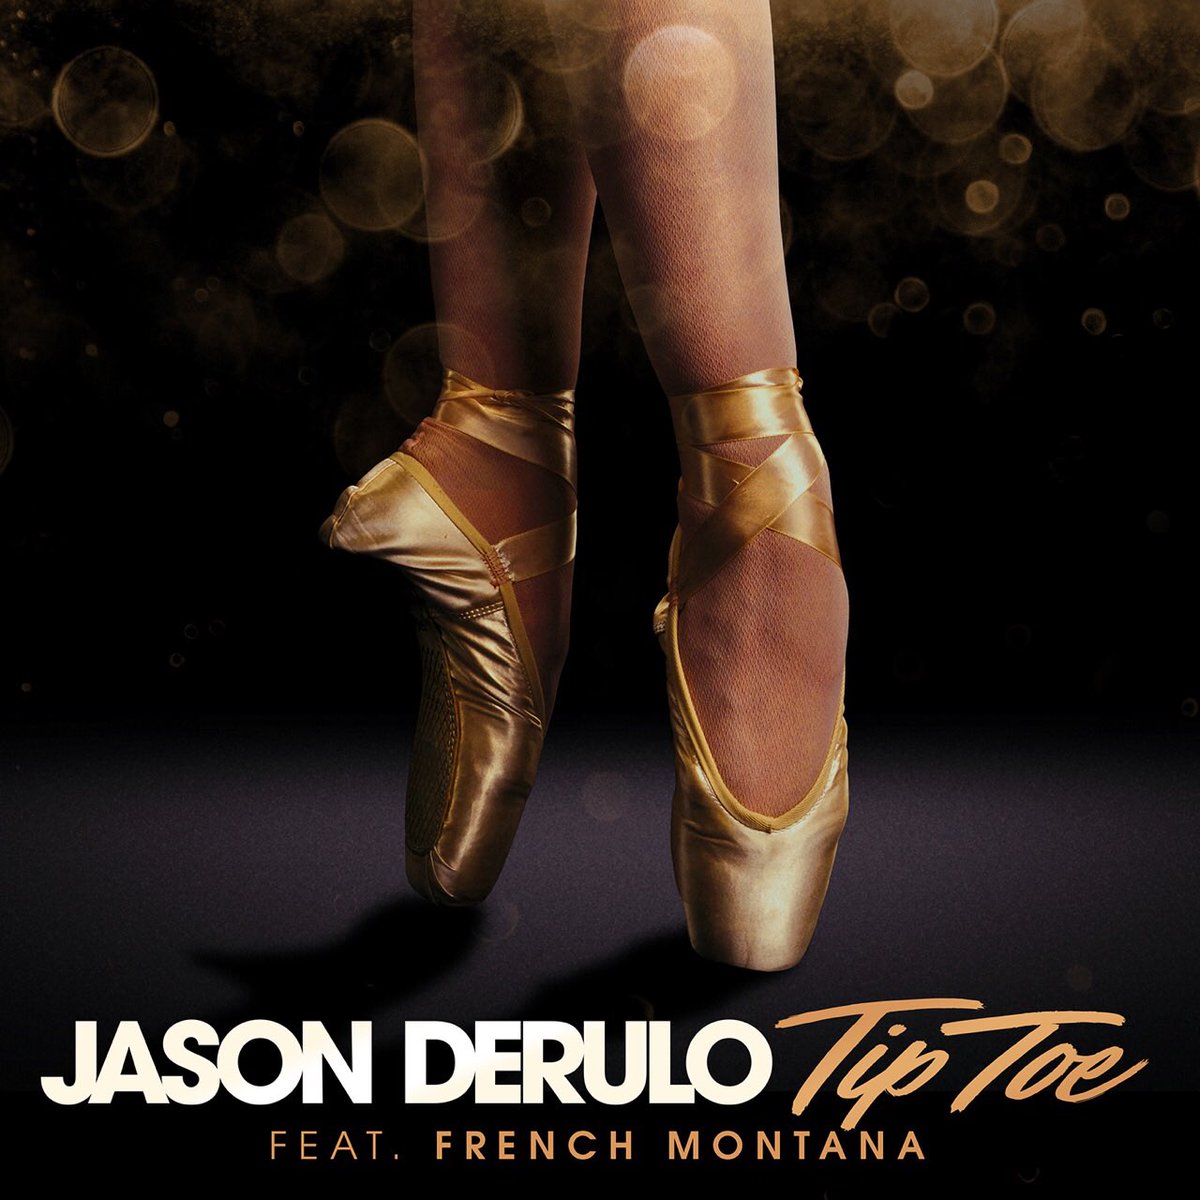 New Music: Jason Derulo – “Tip Toe” Feat. French Montana [LISTEN]